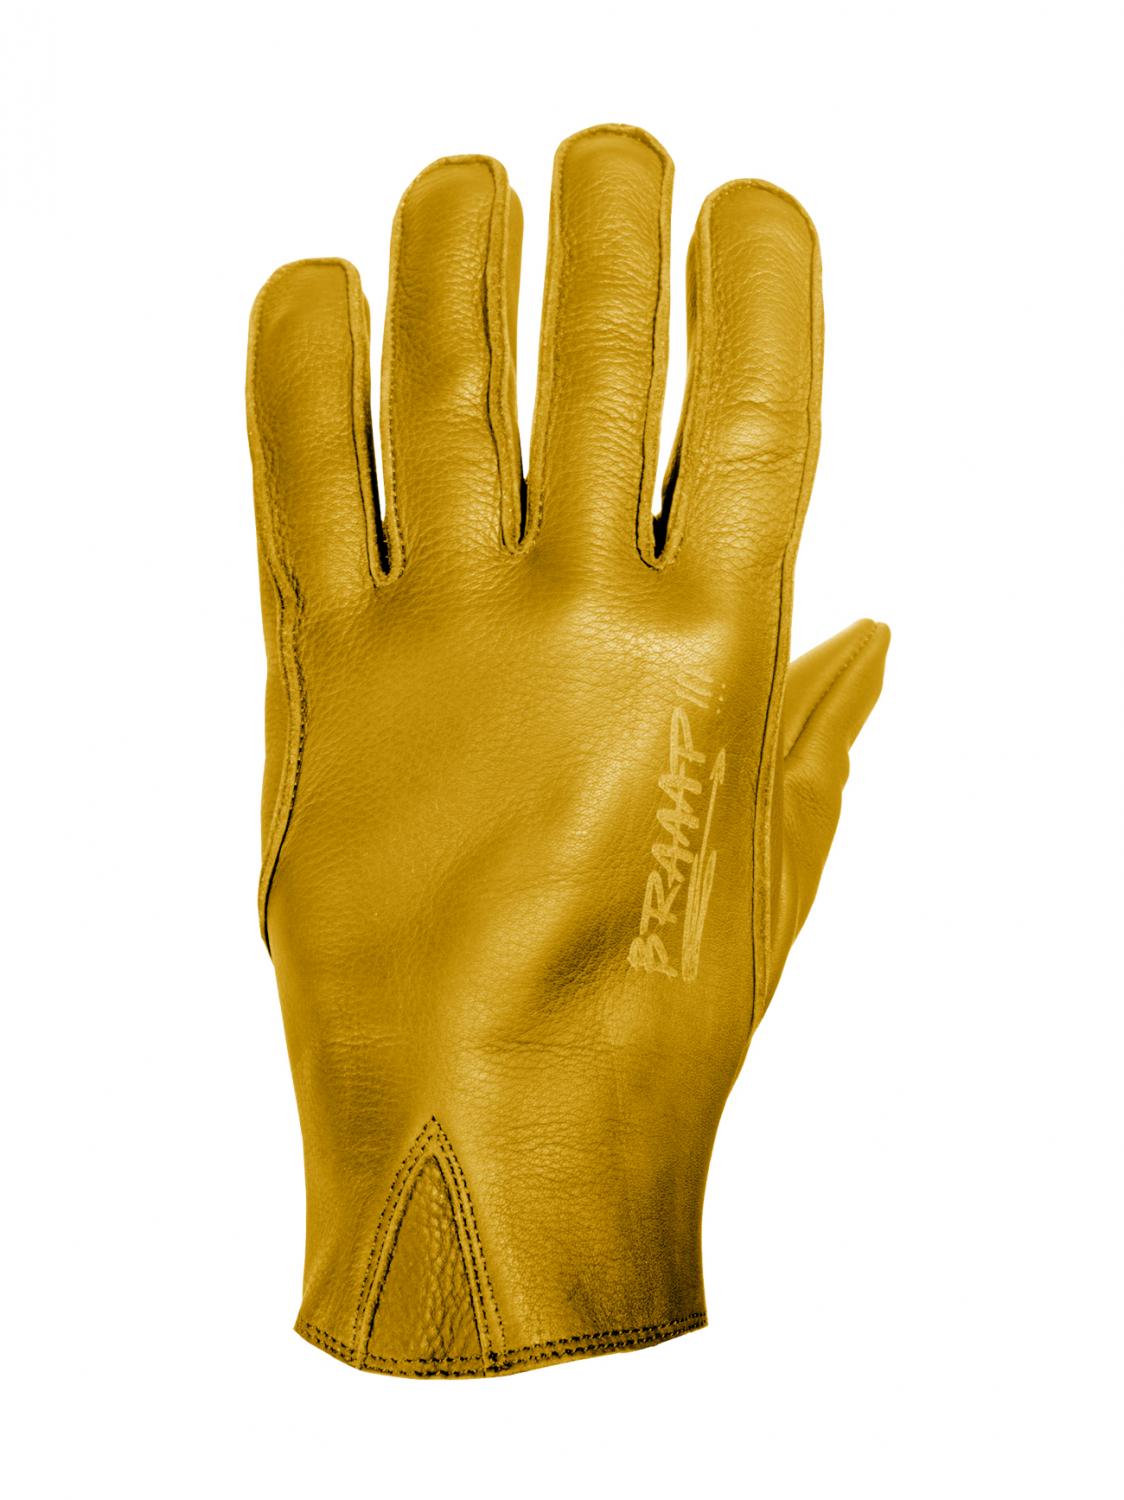 John Doe Ironhead Motorcycle Gloves, Yellow